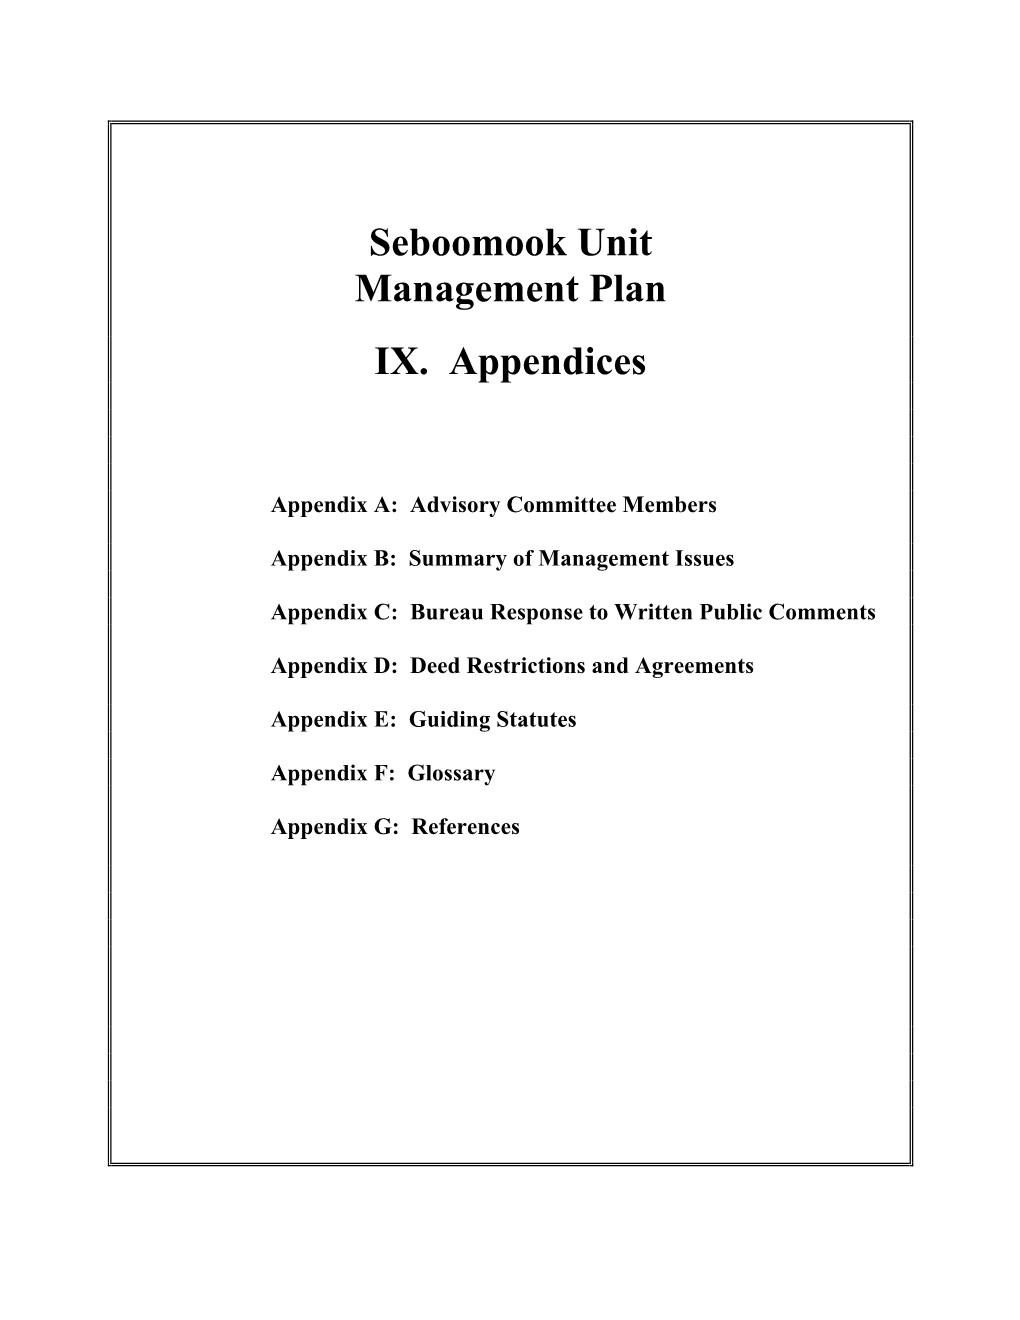 Seboomook Unit Management Plan IX. Appendices